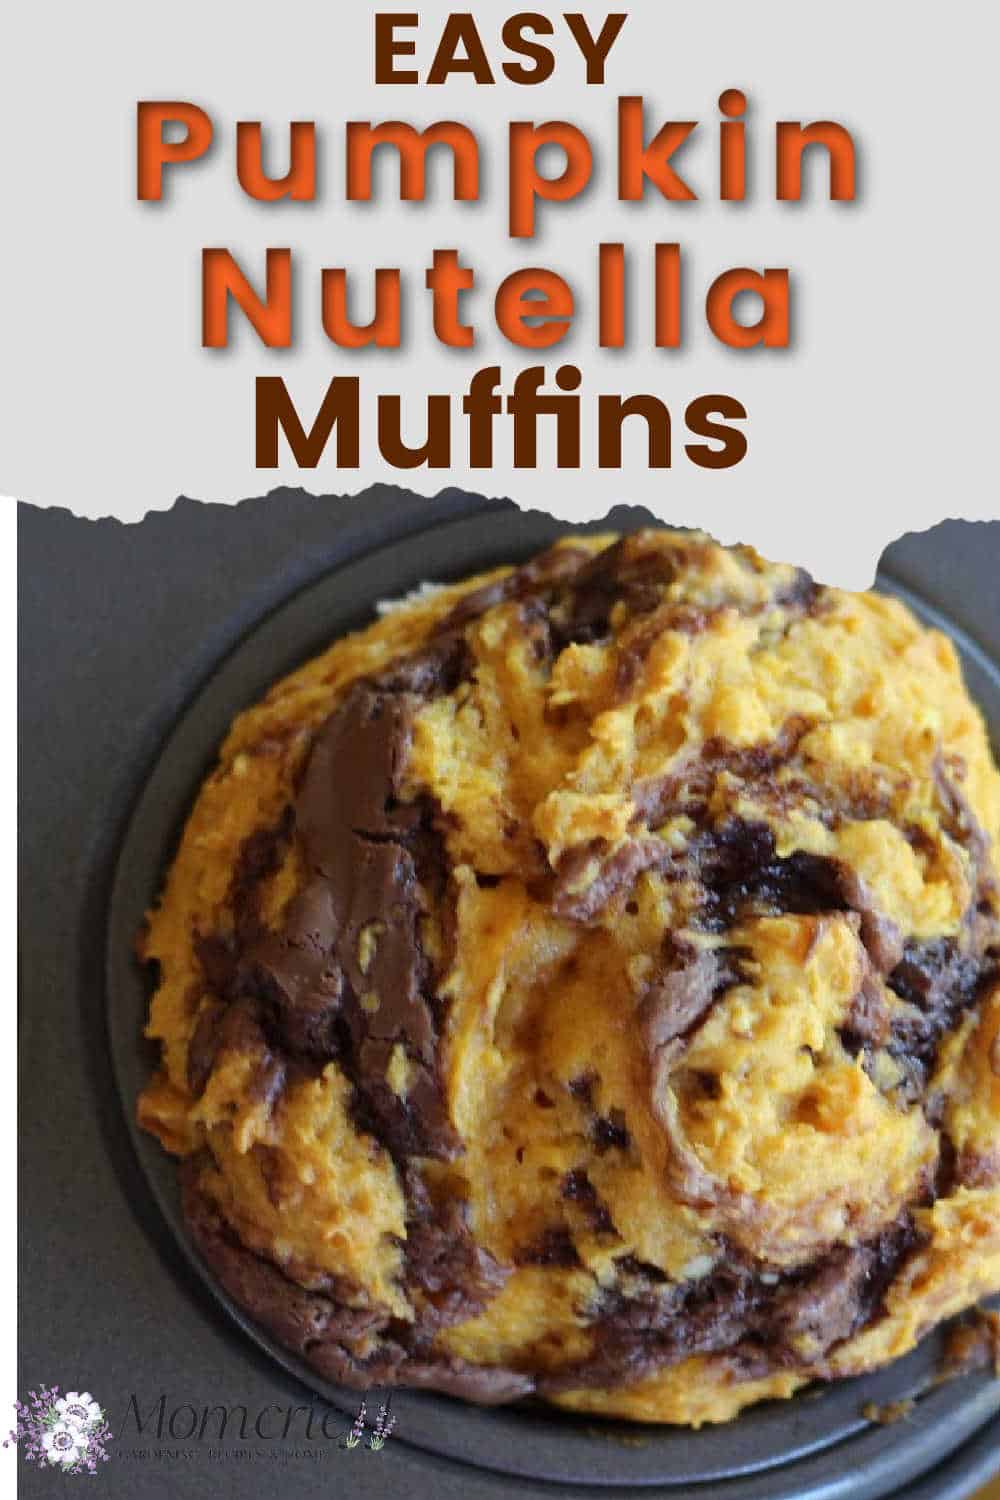 pumpkin muffin with nutella swirl.